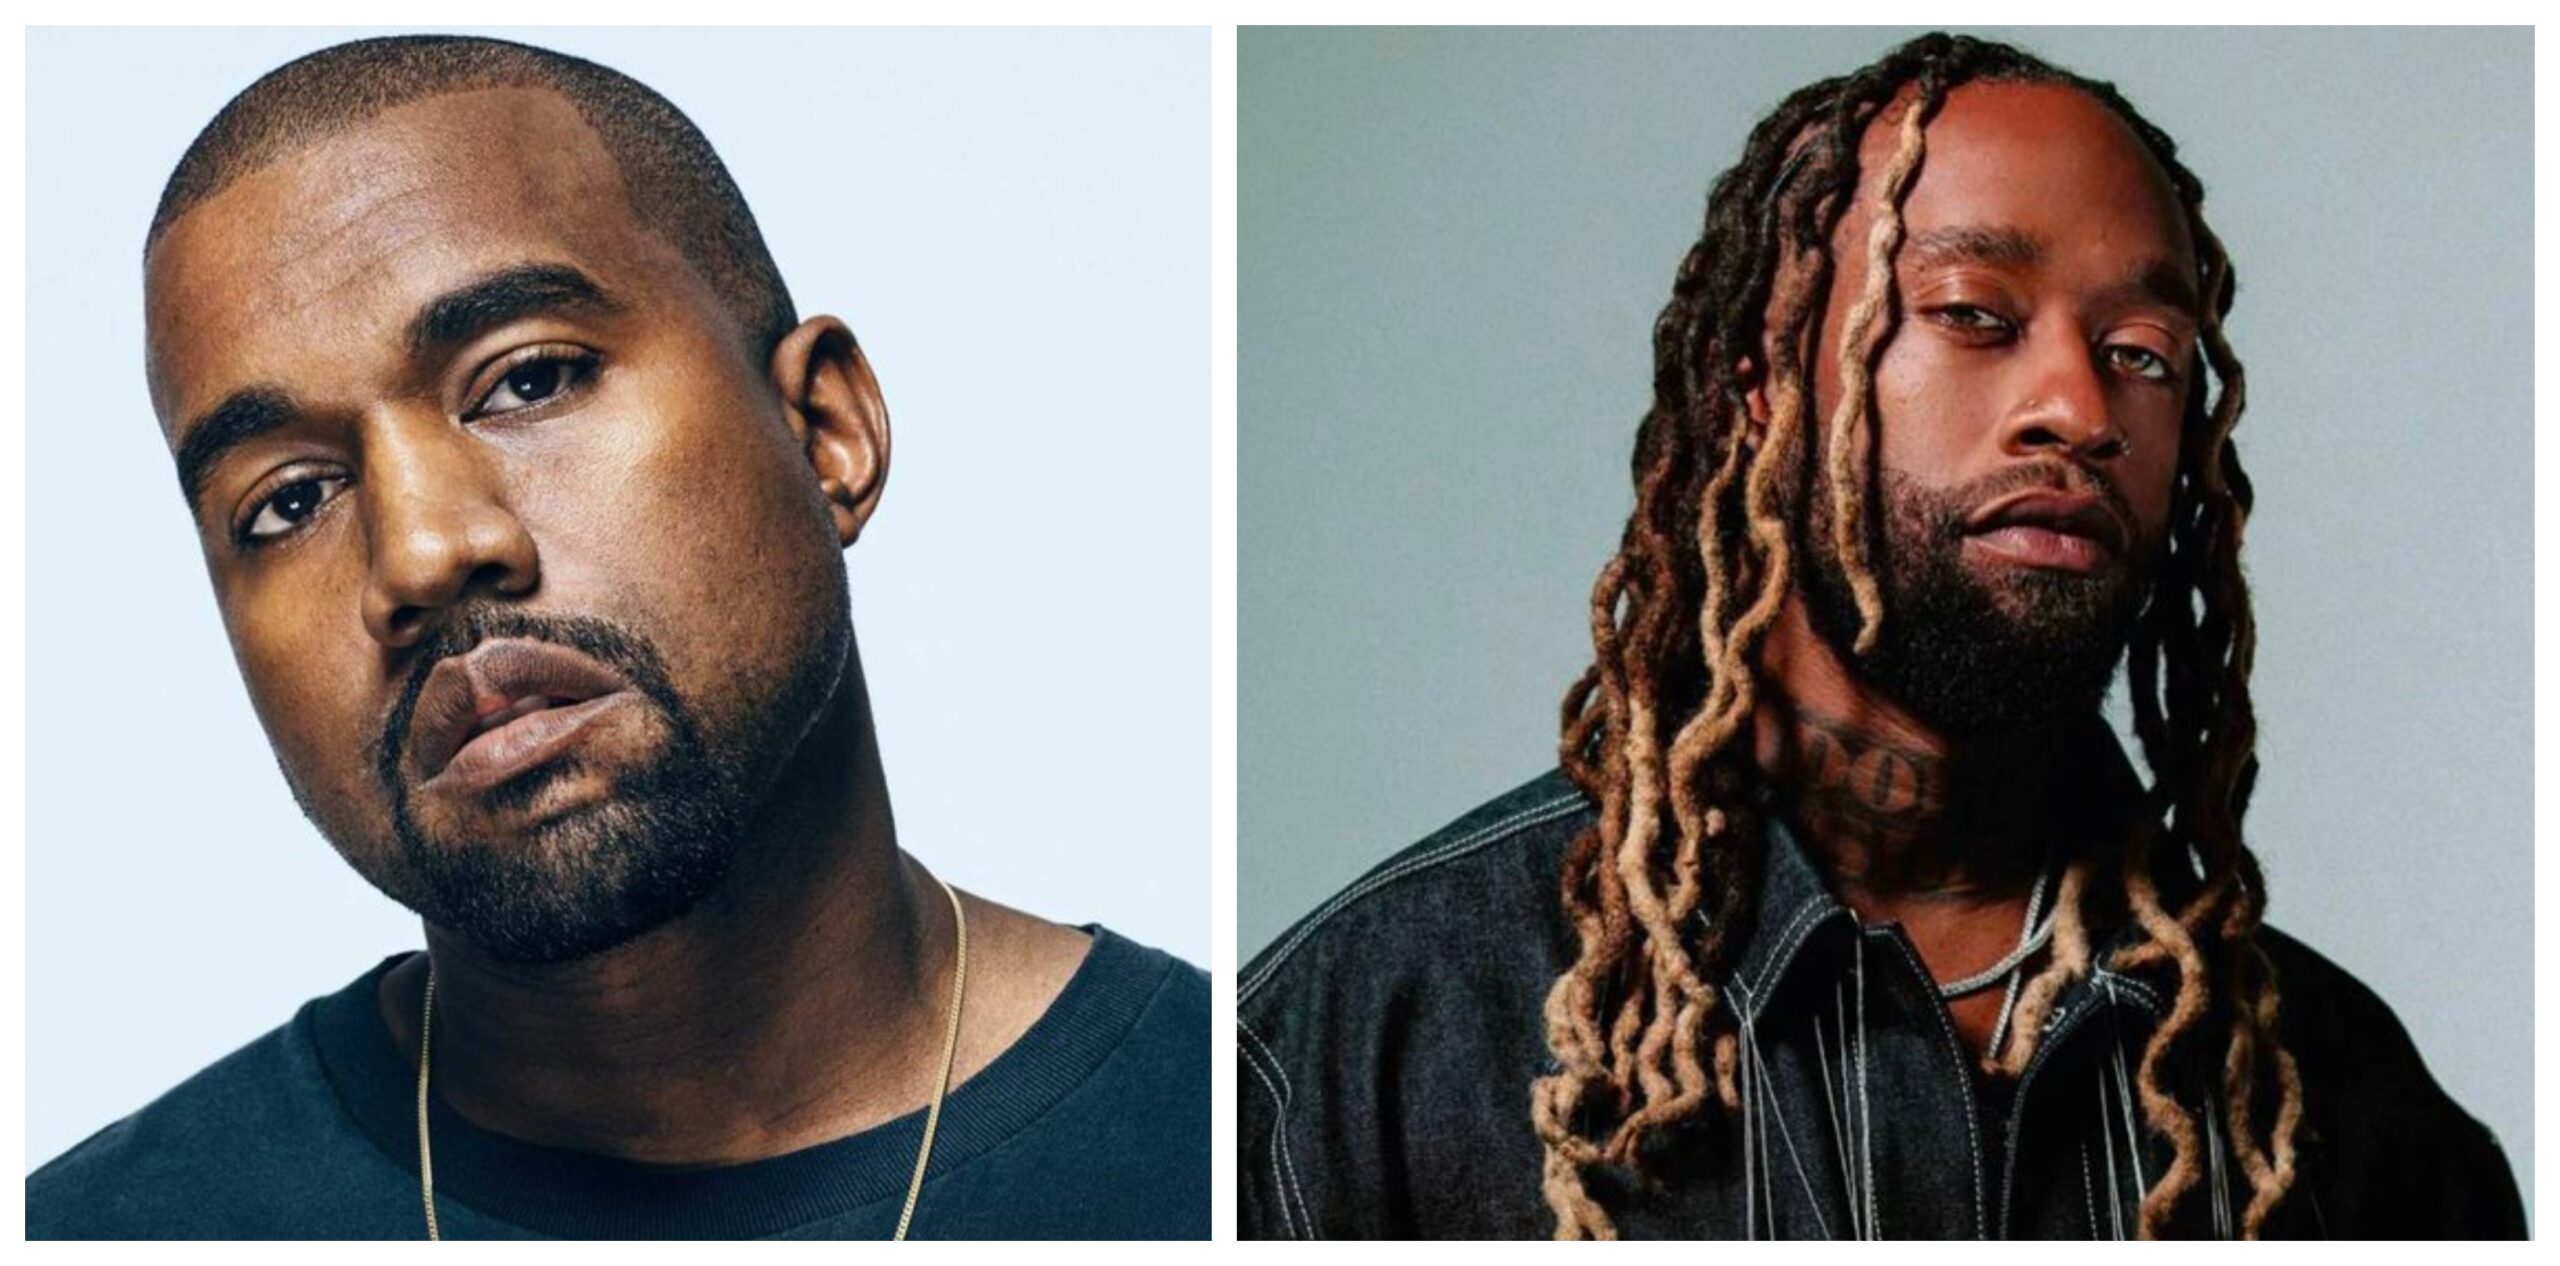 Billboard 200: Kanye West & Ty Dolla Sign’s ‘Vultures 1’ Opens at #1